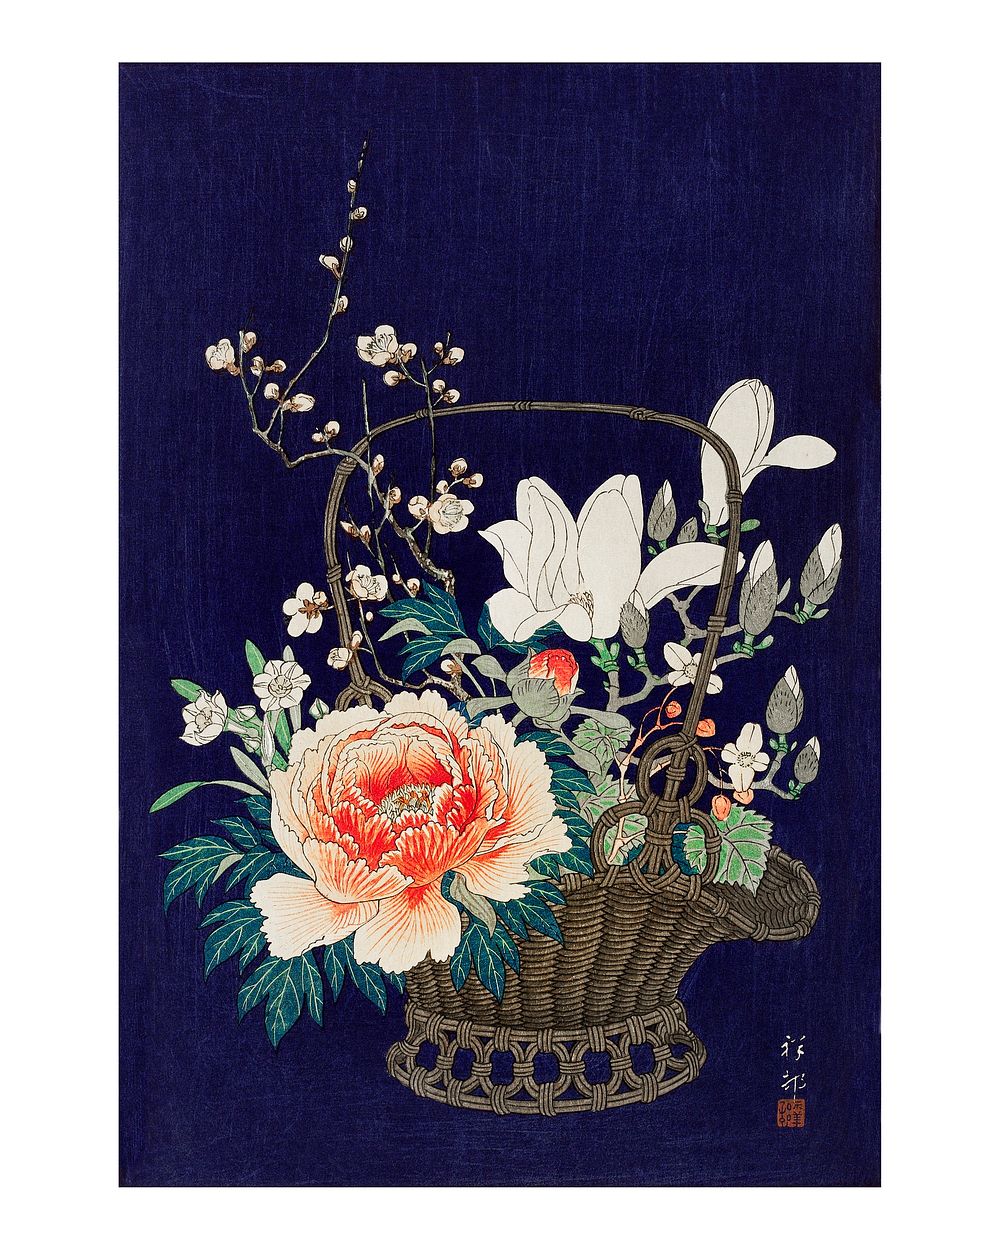 Bamboo flower basket vintage illustration by Ohara Koson. Digitally enhanced by rawpixel.